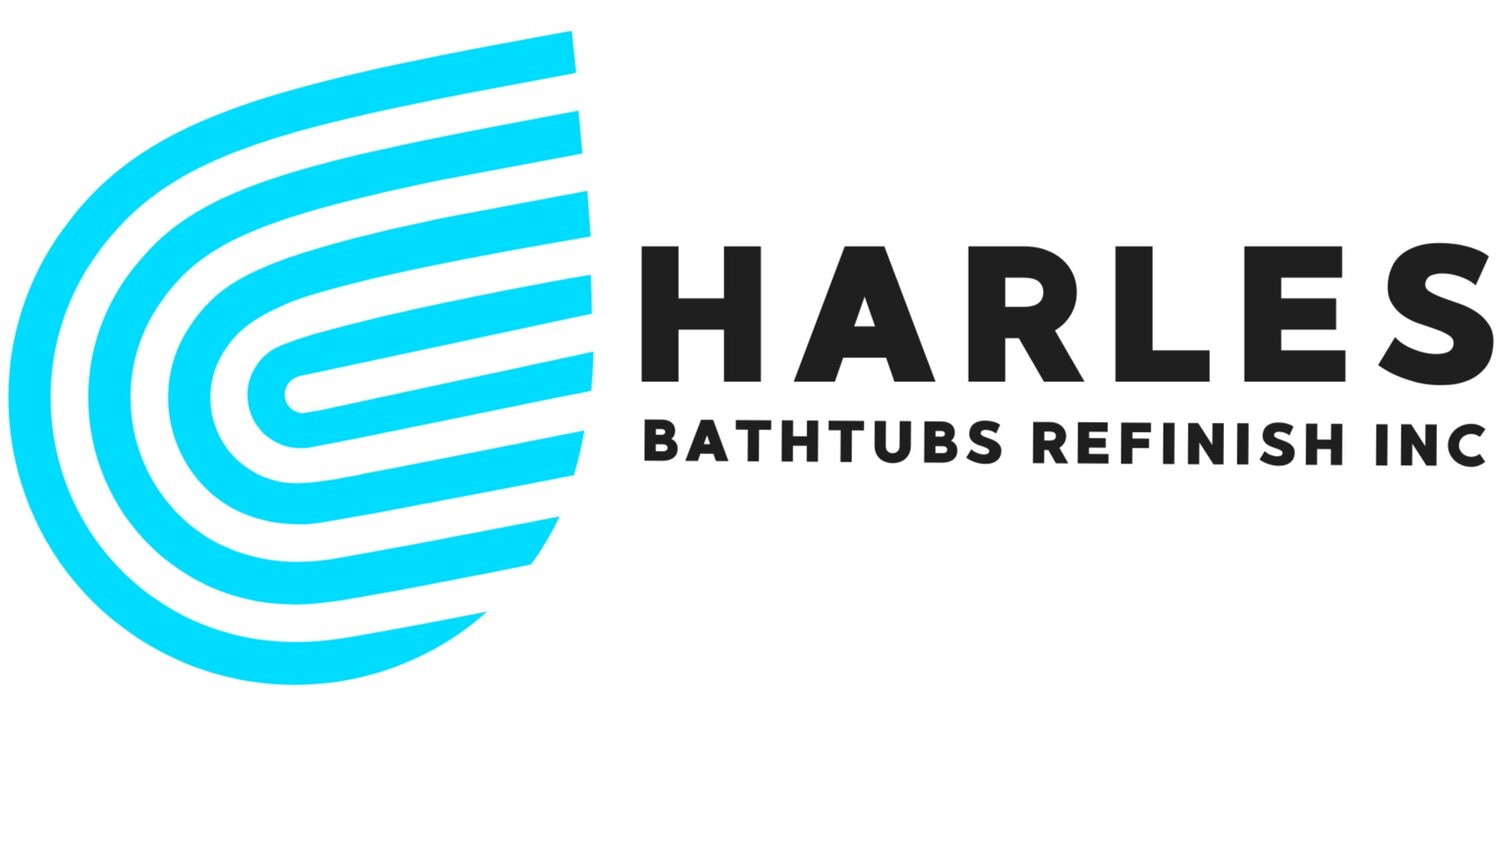 Charles Bathtubs Refinish Inc